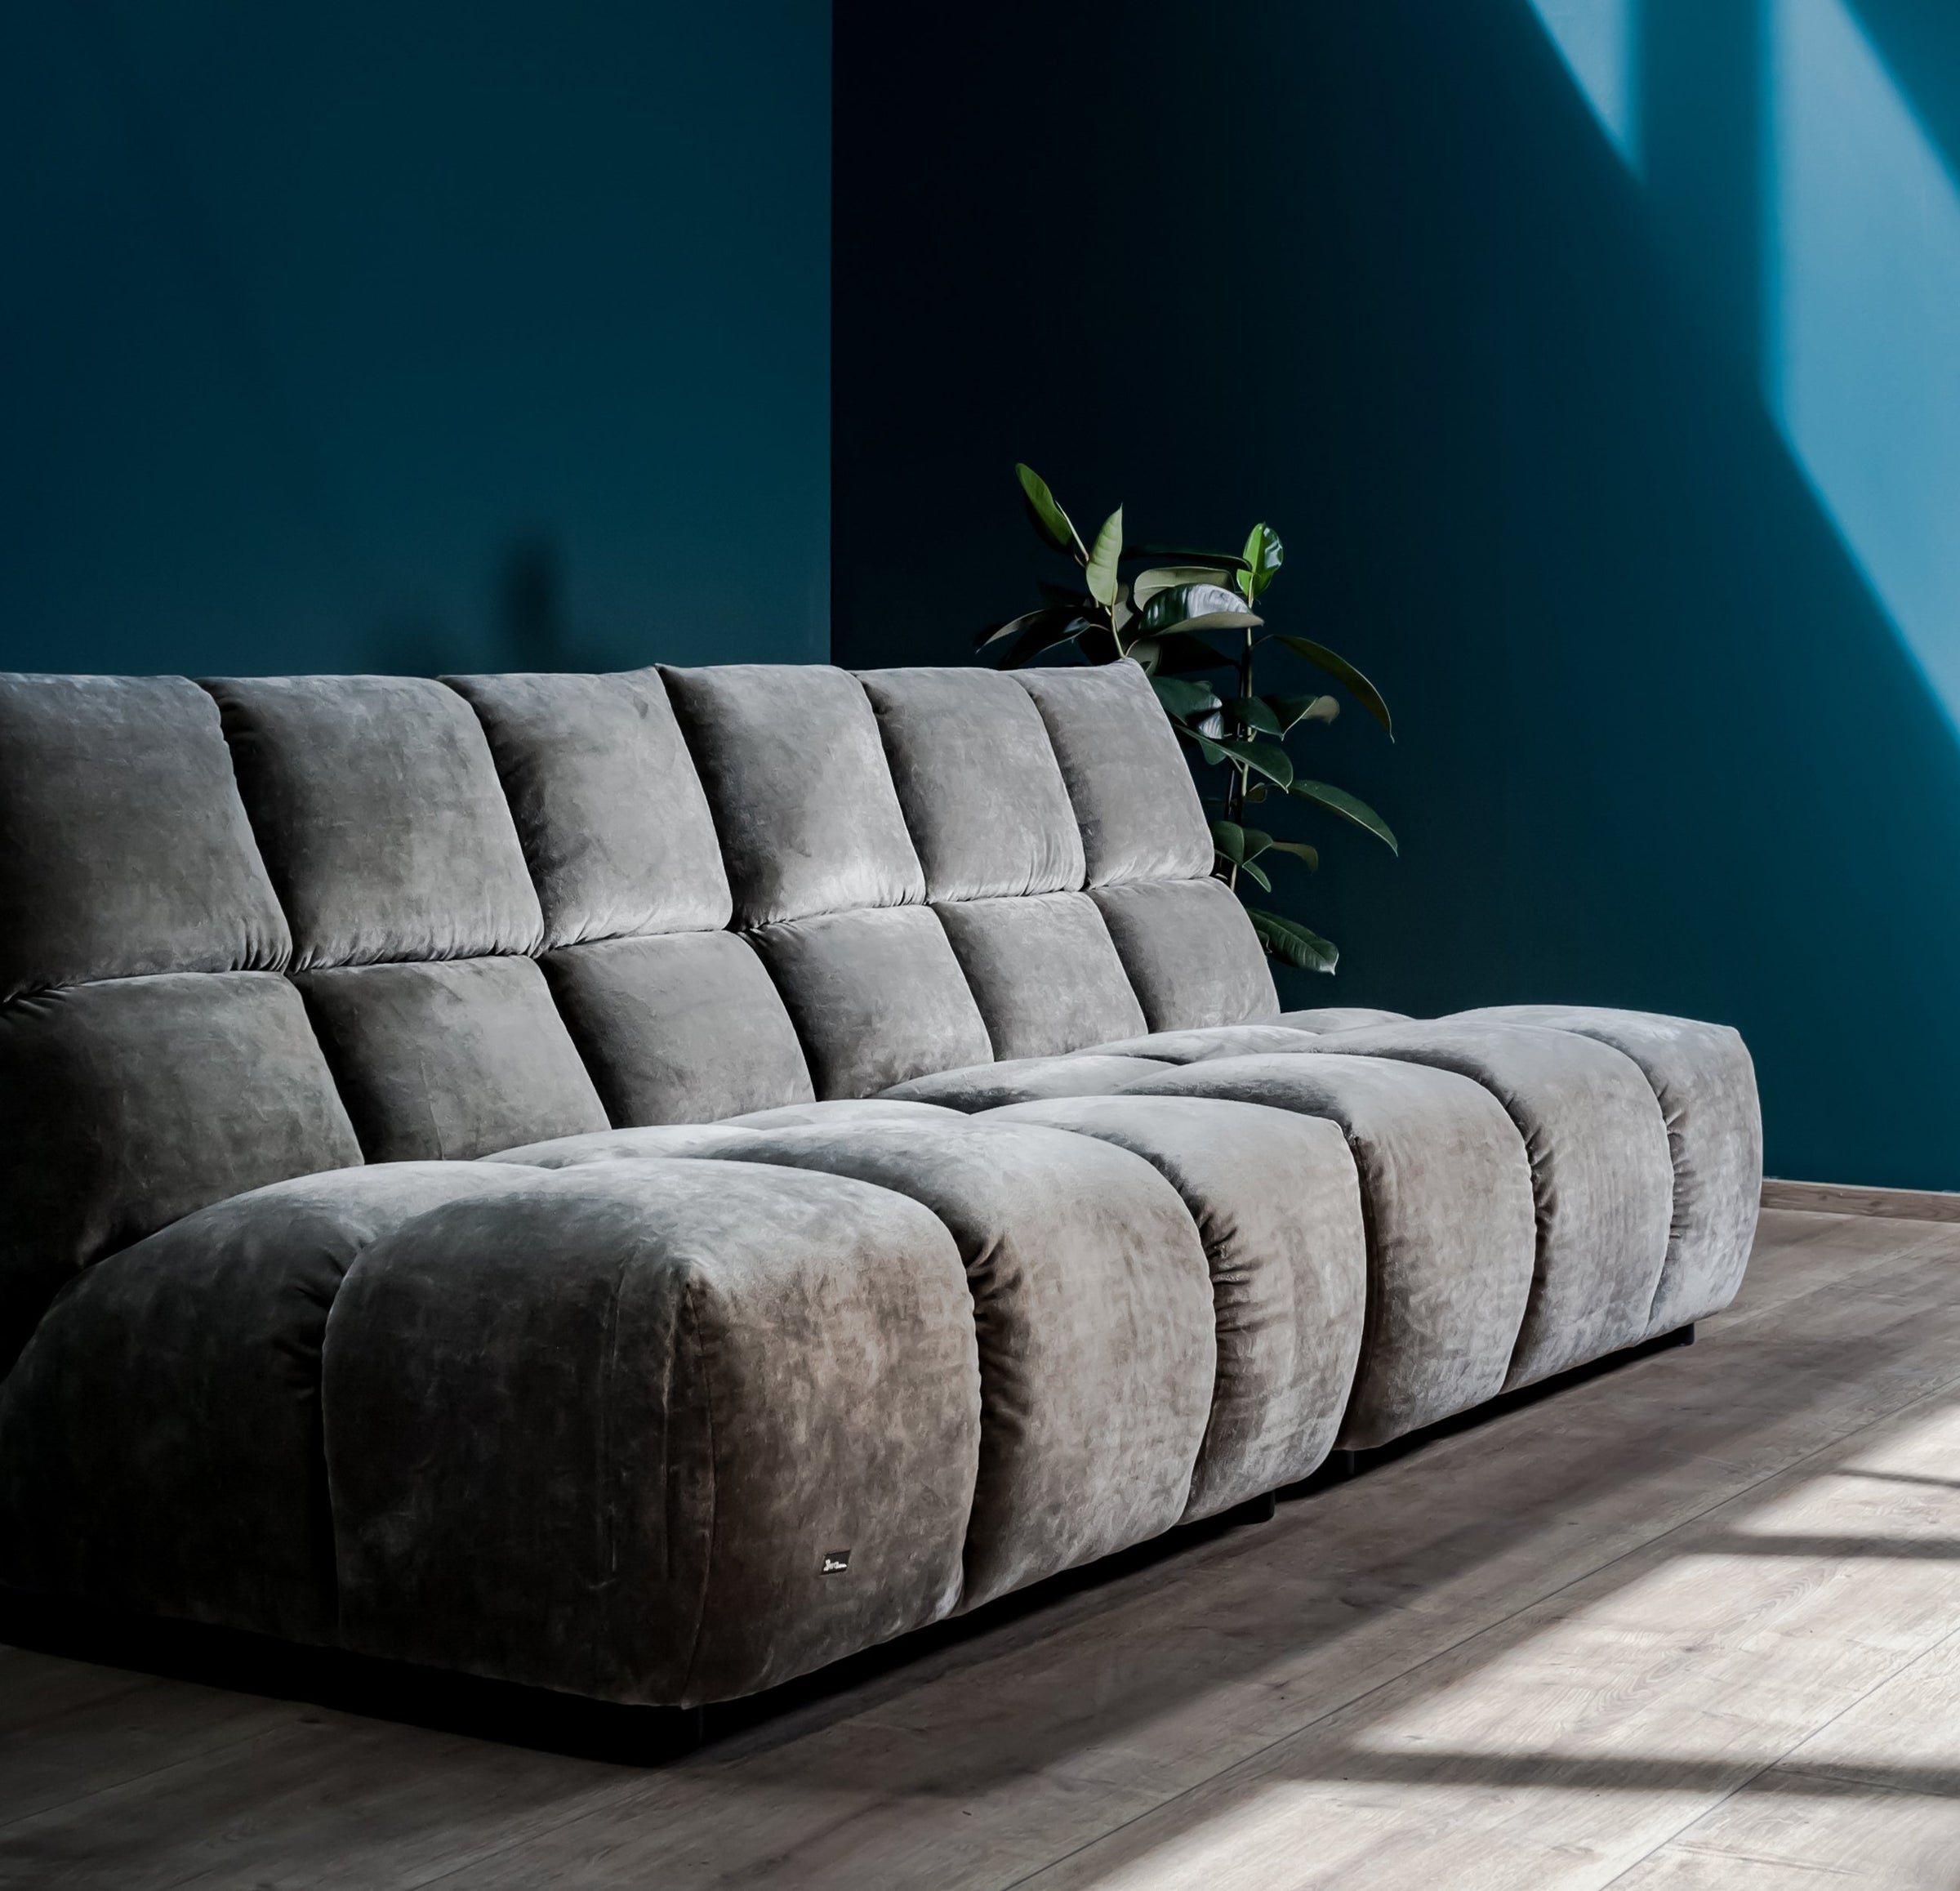 Gebrauchtmöbel bei Revive in Köln, sofa 3 sitzer,  sofa 3 sitze, couch 3 sitzer, dreisitzer sofa, sofa dreisitzer, dreisitzer sofa mit schlaffunktion, couch dreisitzer, moebel online, gebrauchte möbel, möbel online, sofa online kaufen, möbel kauf